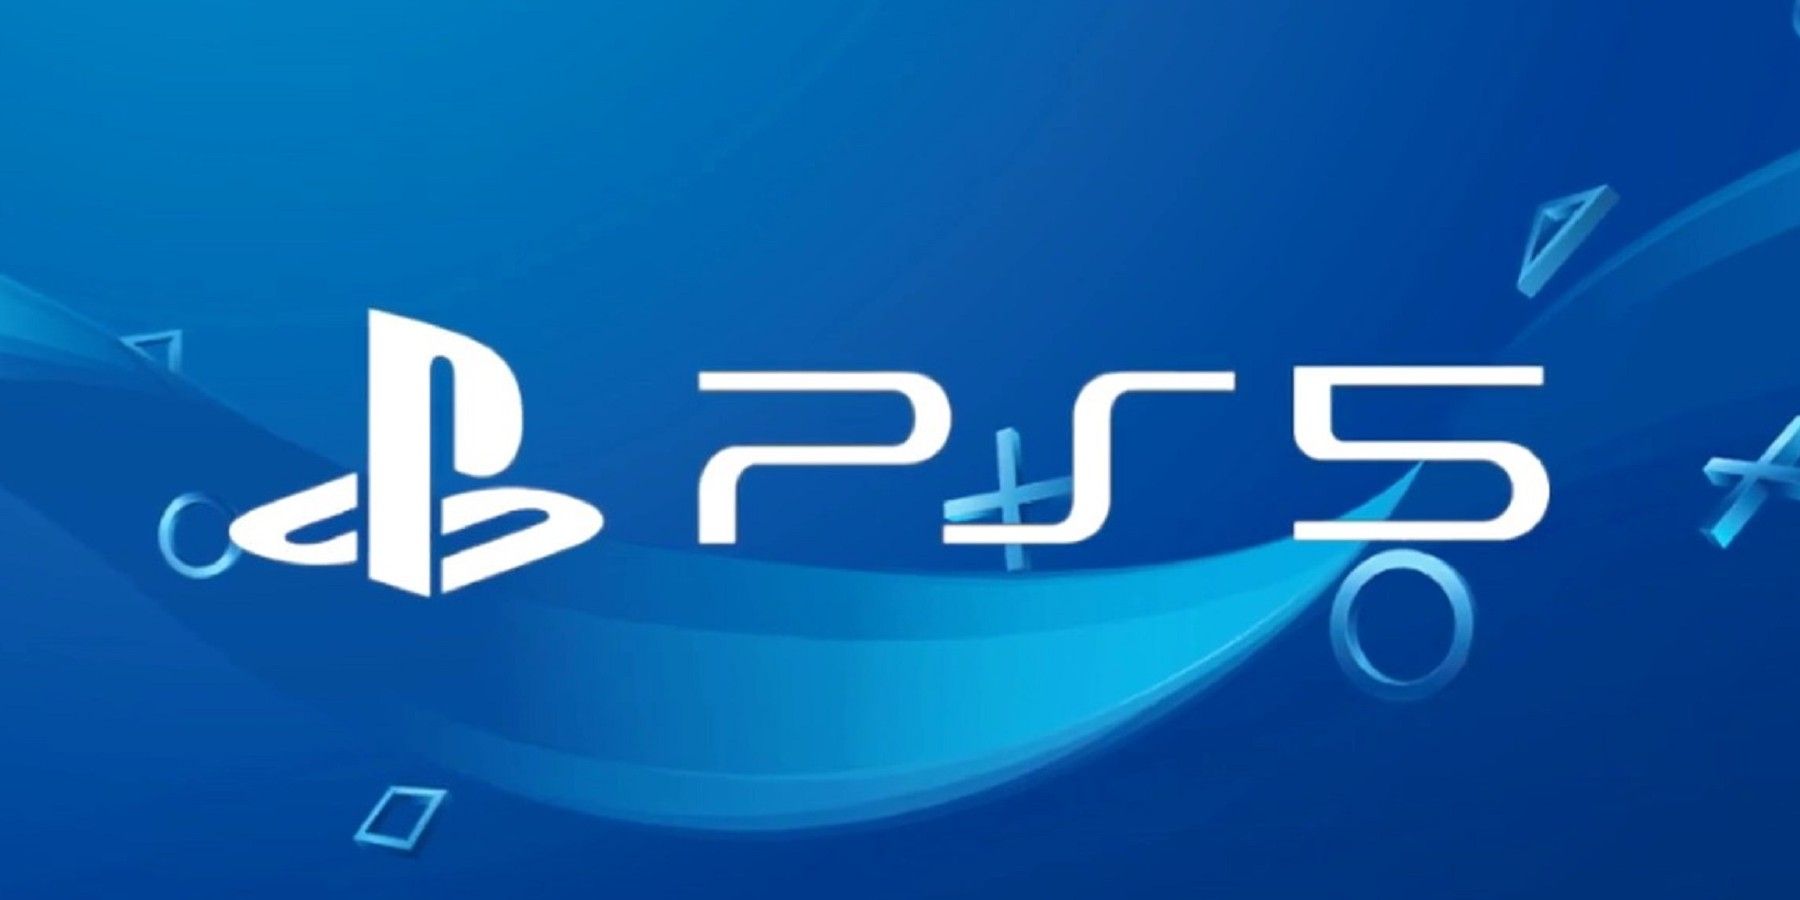 ps5-logo